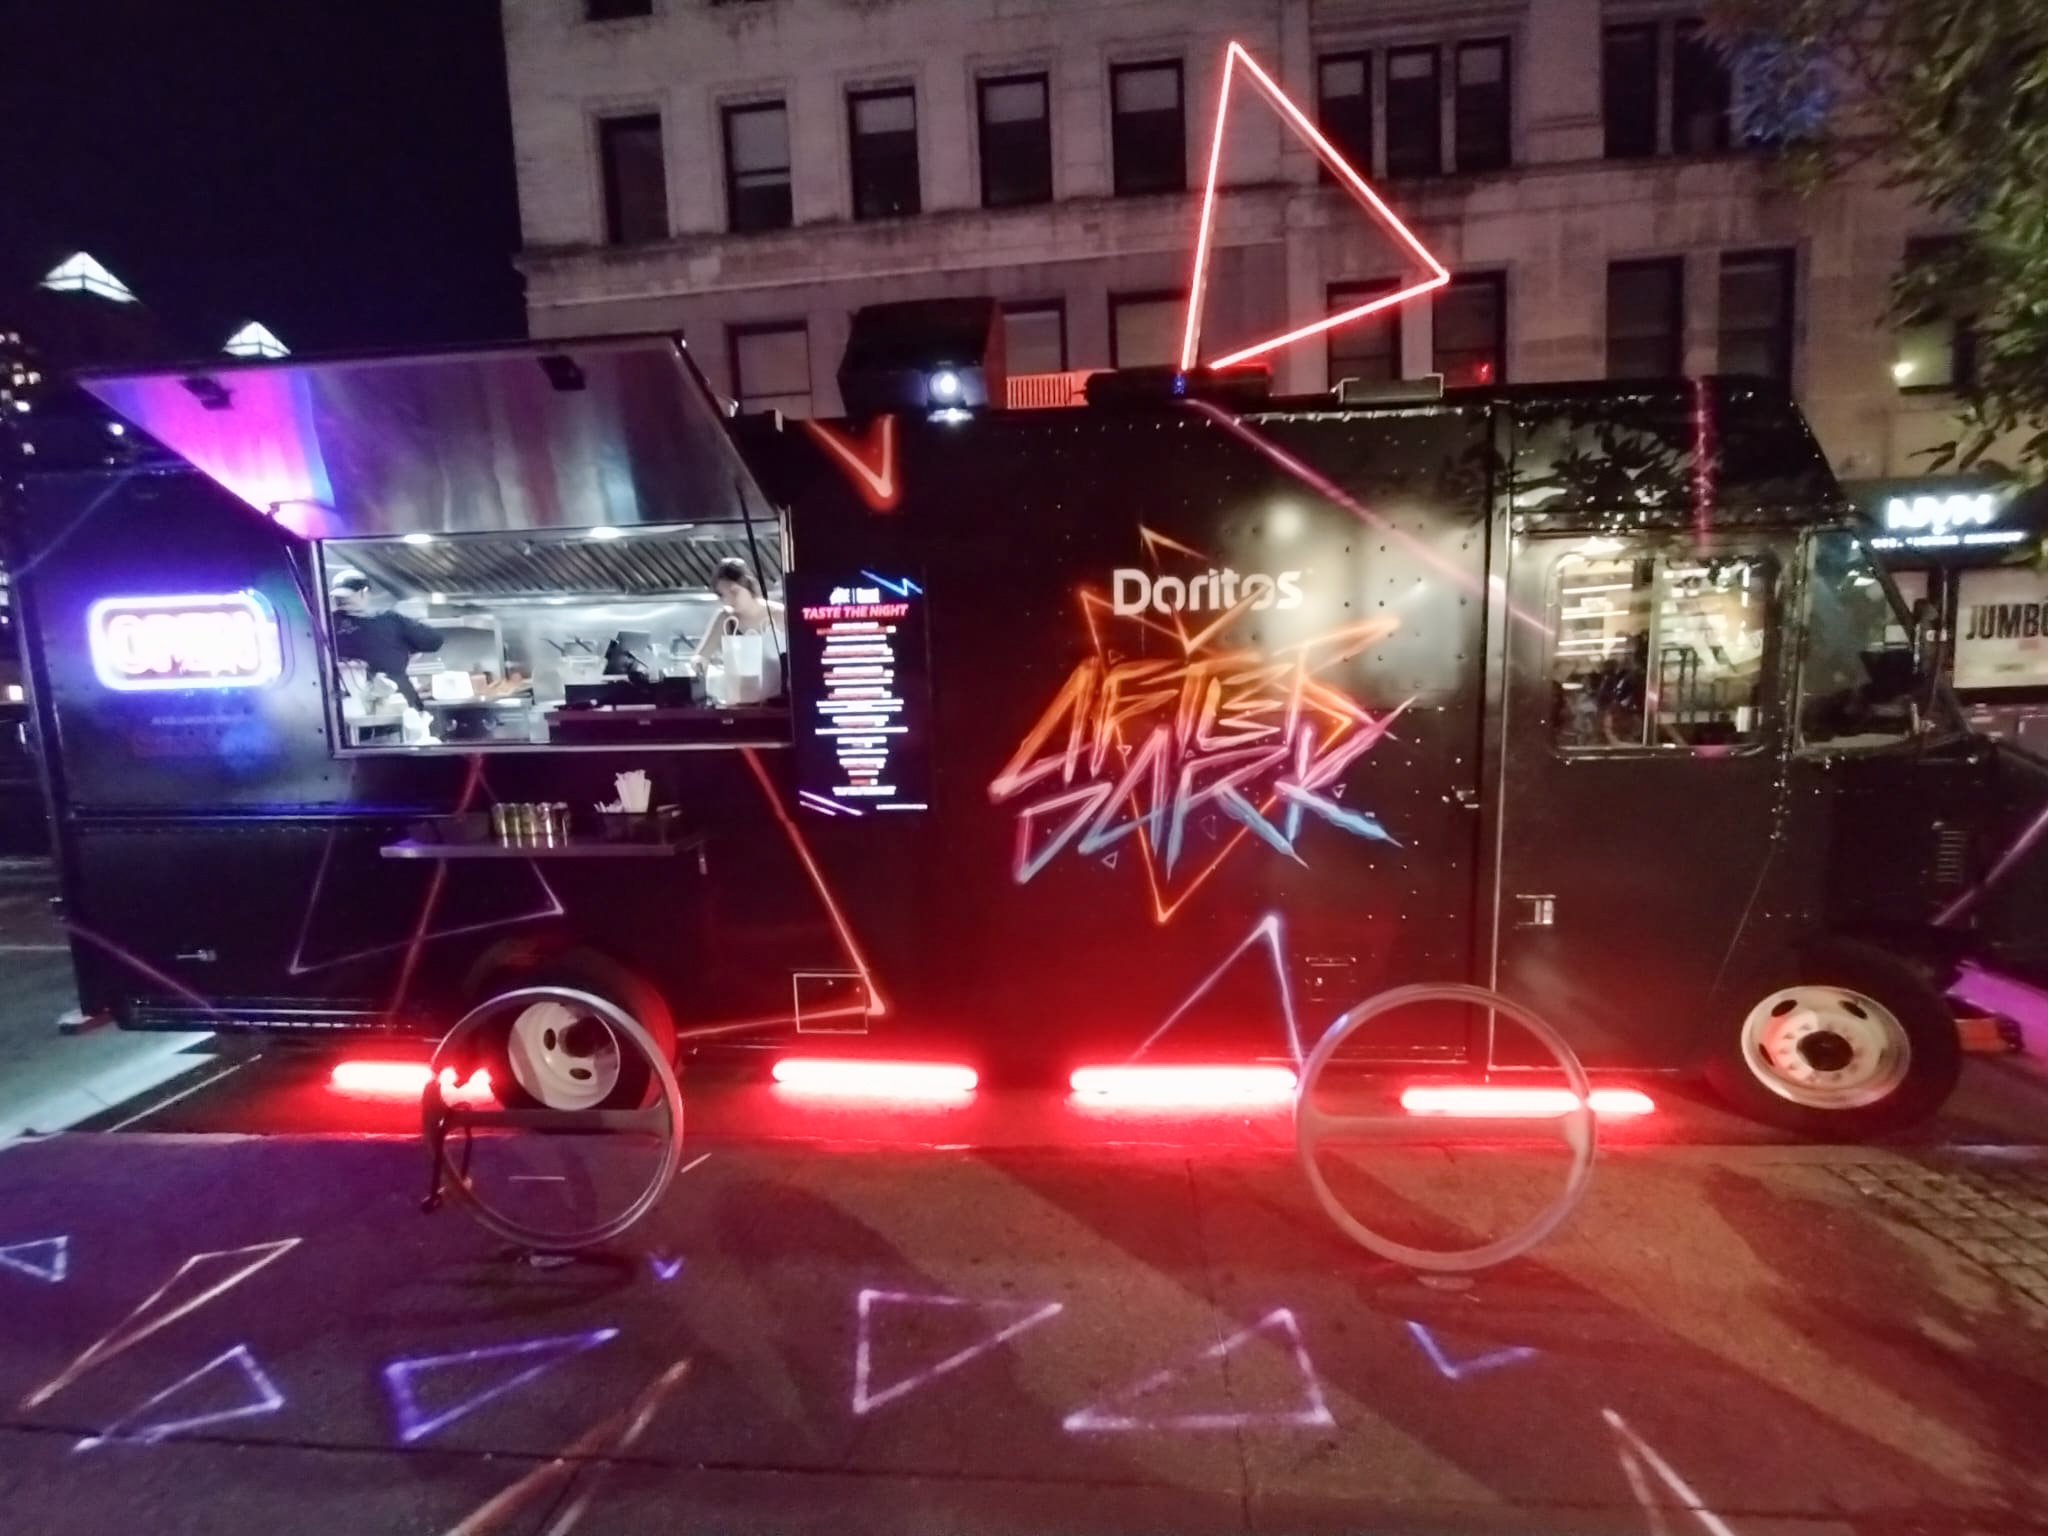 mobile pop-up food truck activation branded food truck Nvs visuals promo